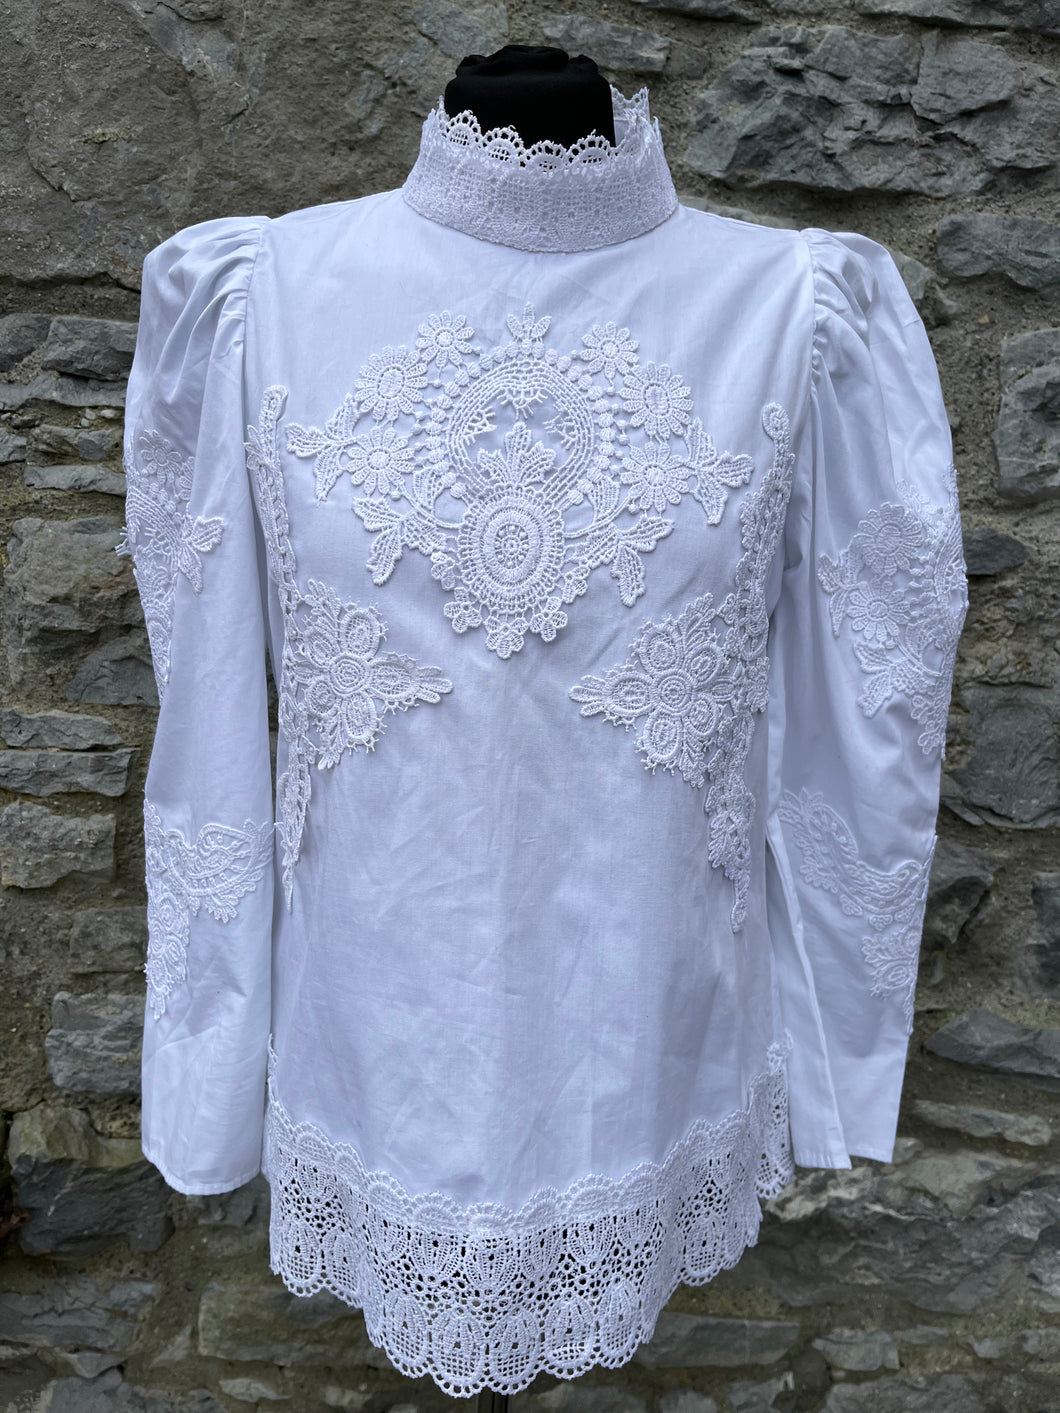 White Victorian style blouse uk 8